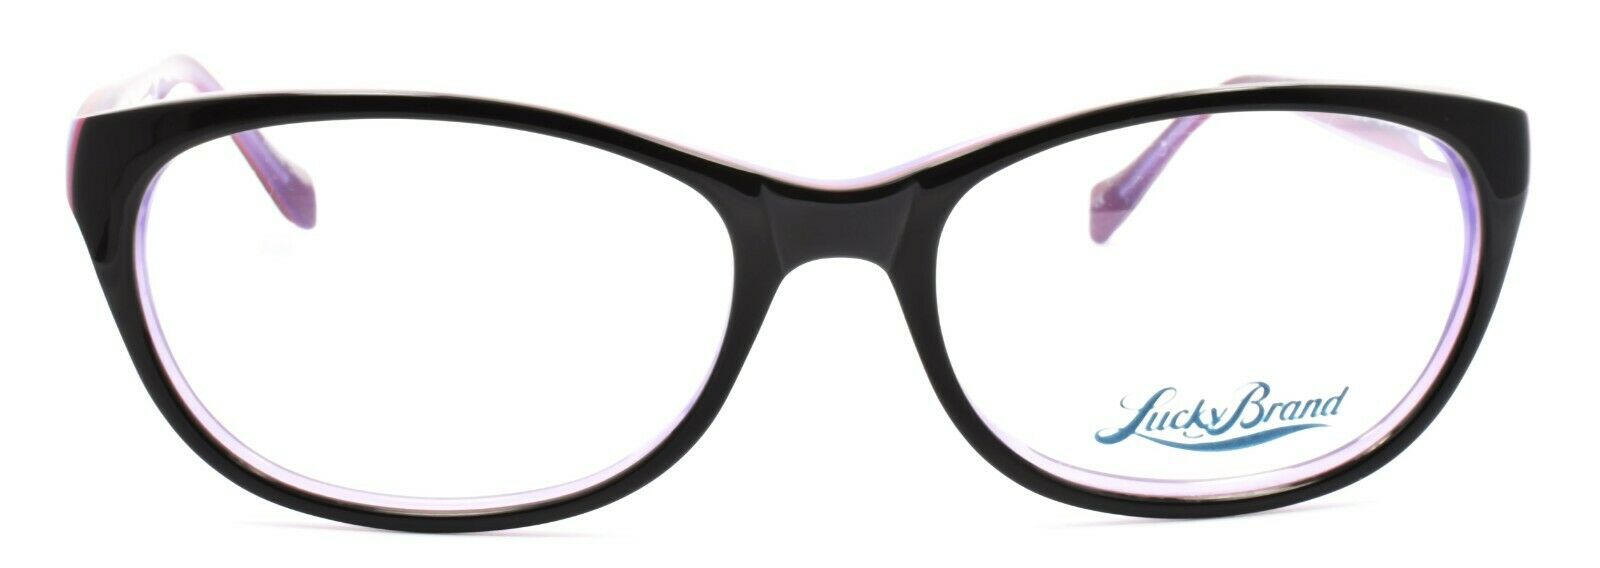 2-LUCKY BRAND D600 Women's Eyeglasses Frames 52-16-135 Black + CASE-751286277449-IKSpecs